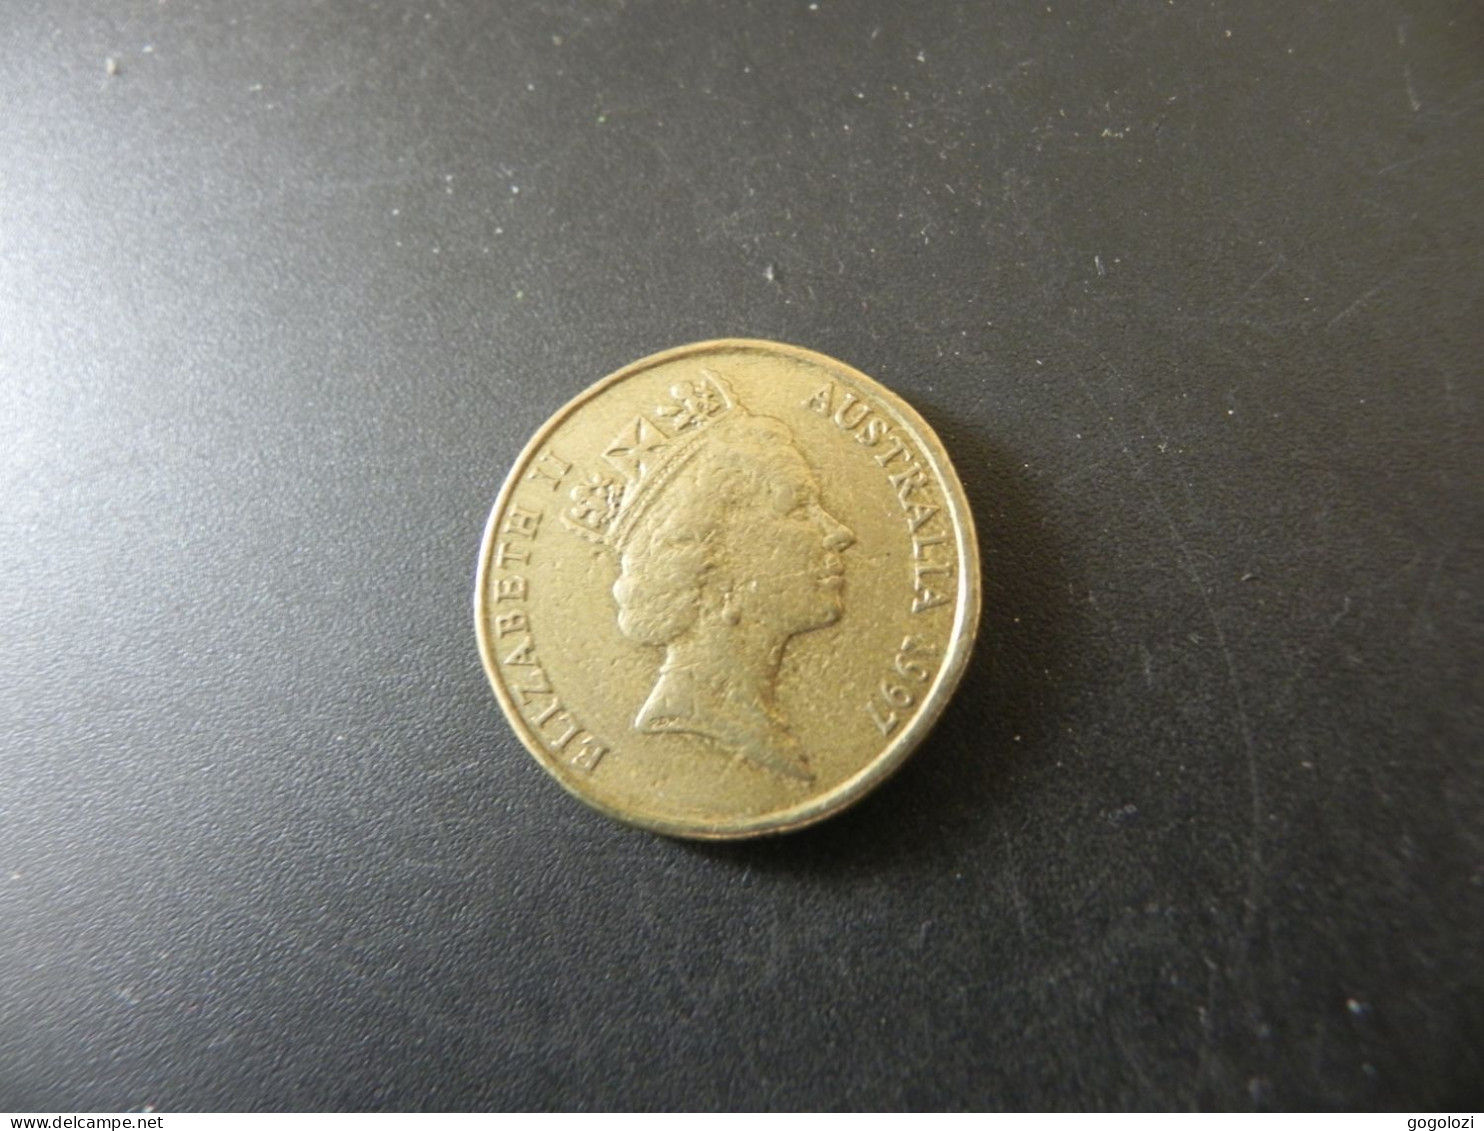 Australia 1 Dollar 1997 - Sir Charles Kingsford Smith - Dollar